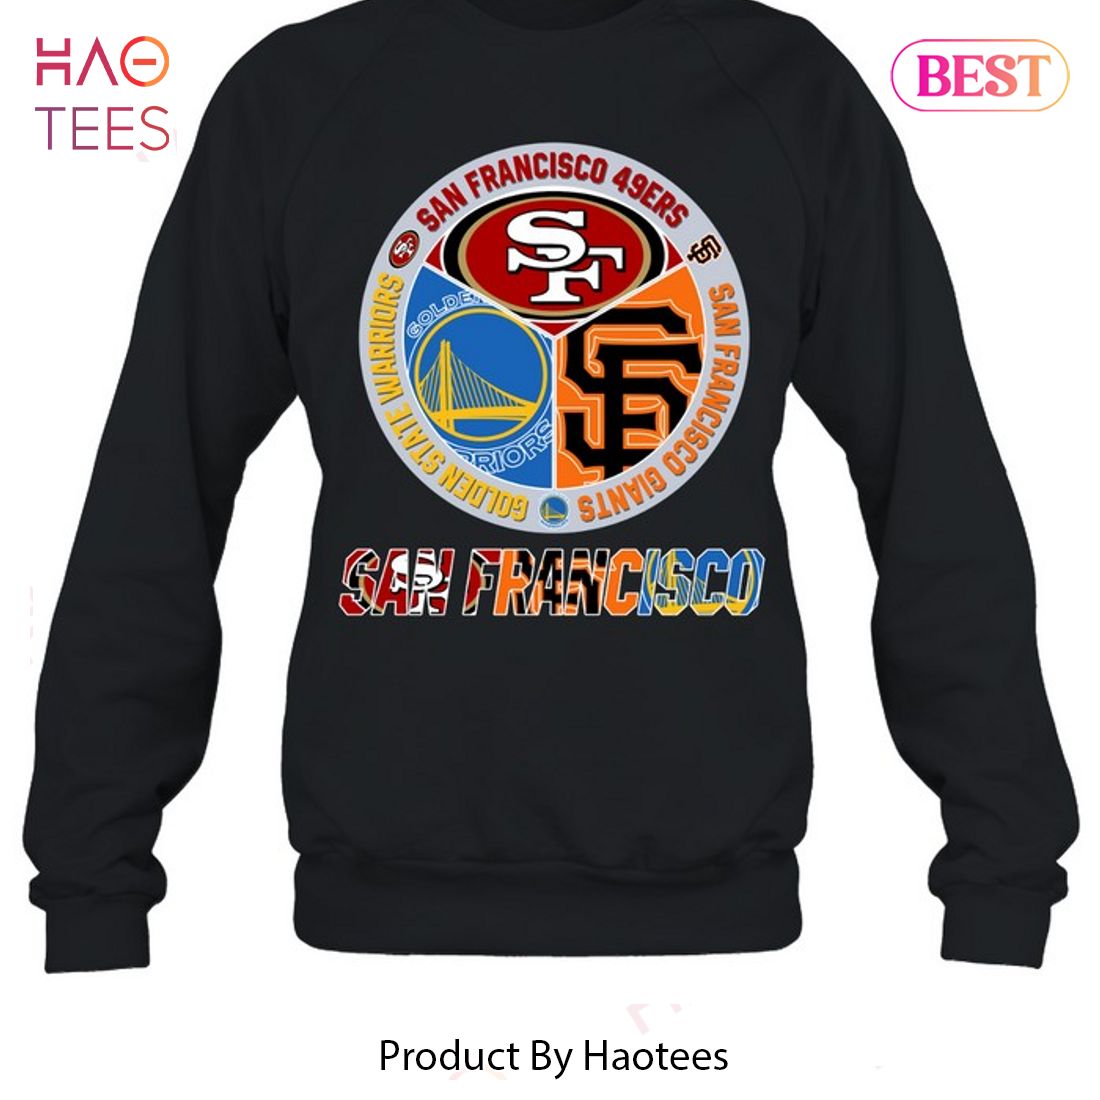 San francisco and logo Golden State Warriors and Logo San Francisco 49ers  and logo logo San Francisco Giants shirt, hoodie, longsleeve, sweater